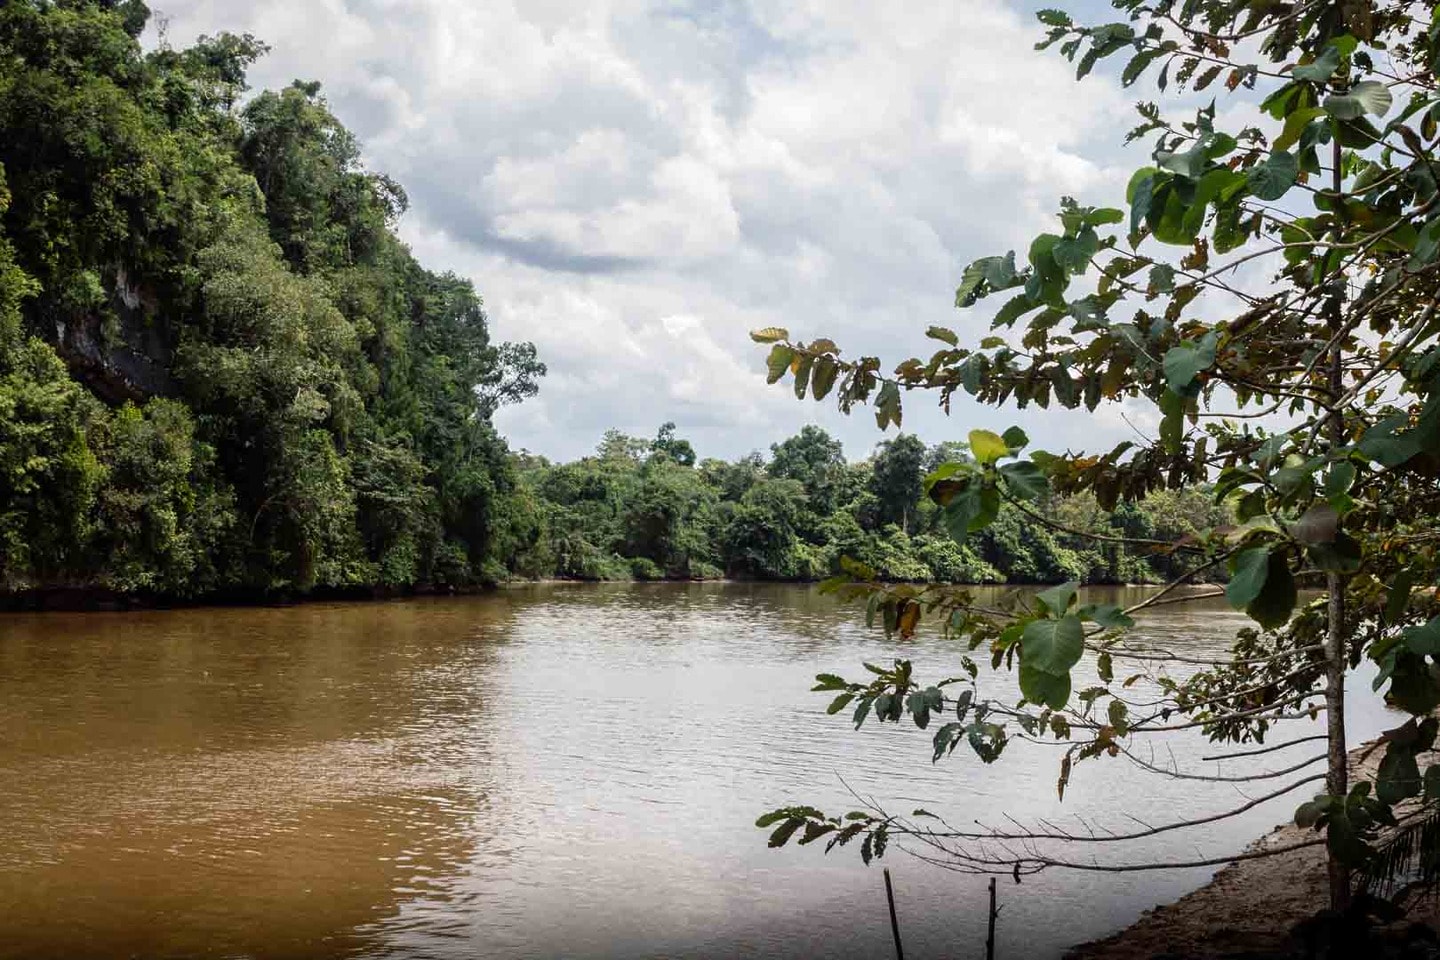 River Kinabatangan in Borneo